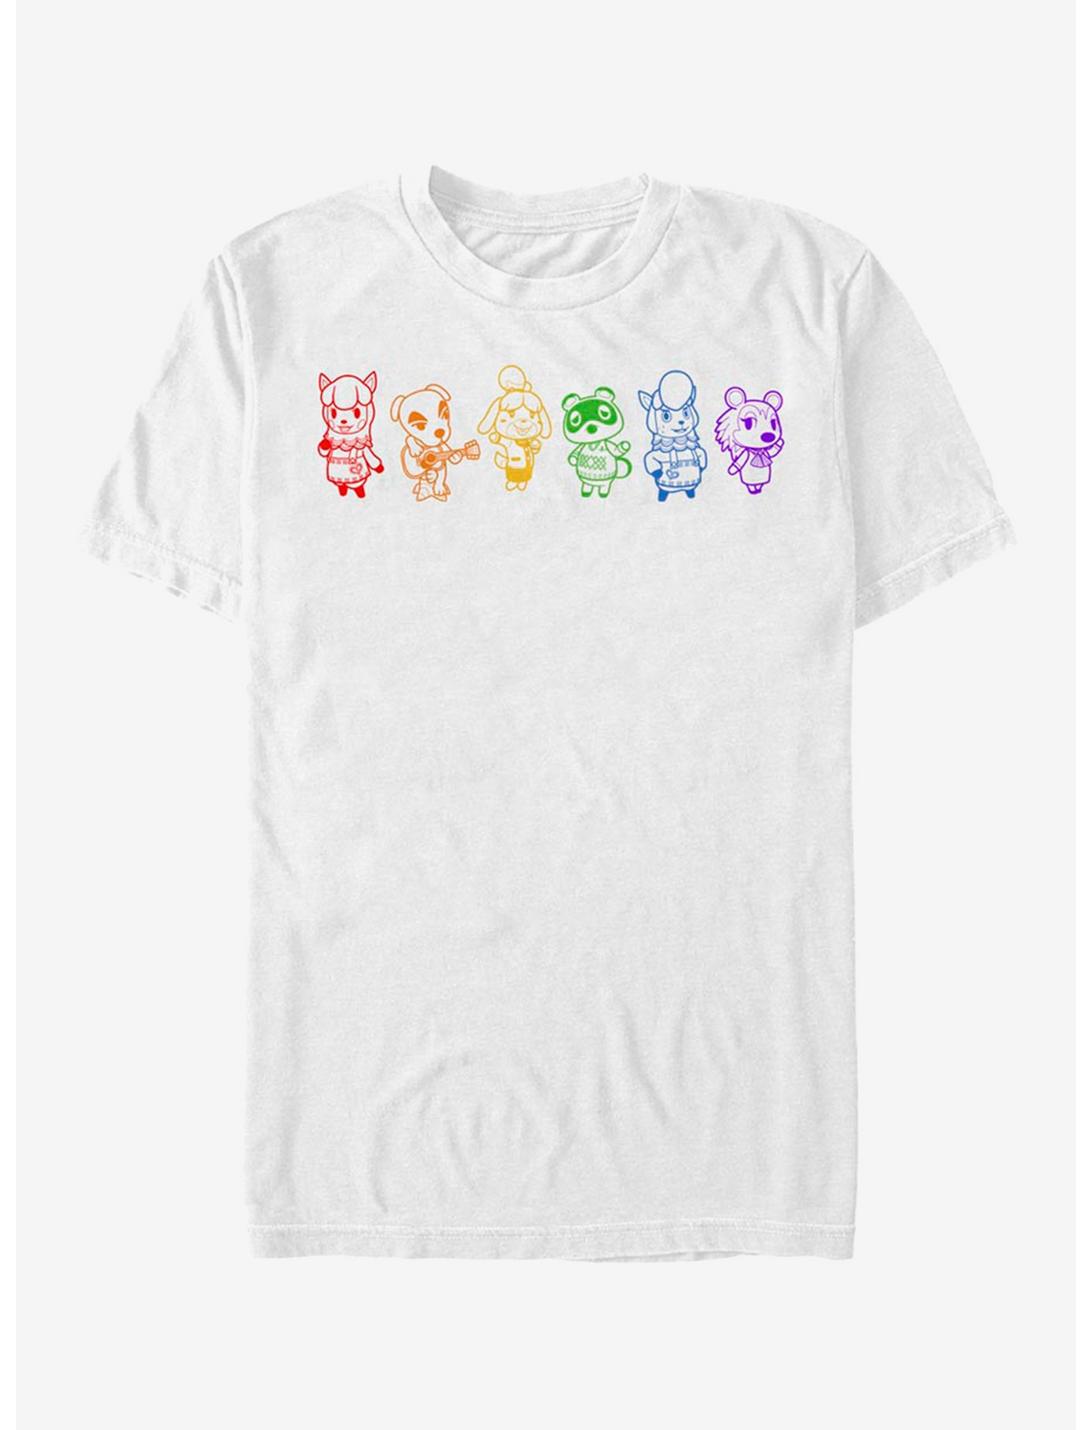 Extra Soft Nintendo Animal Crossing Line Art Rainbow T-Shirt, WHITE, hi-res